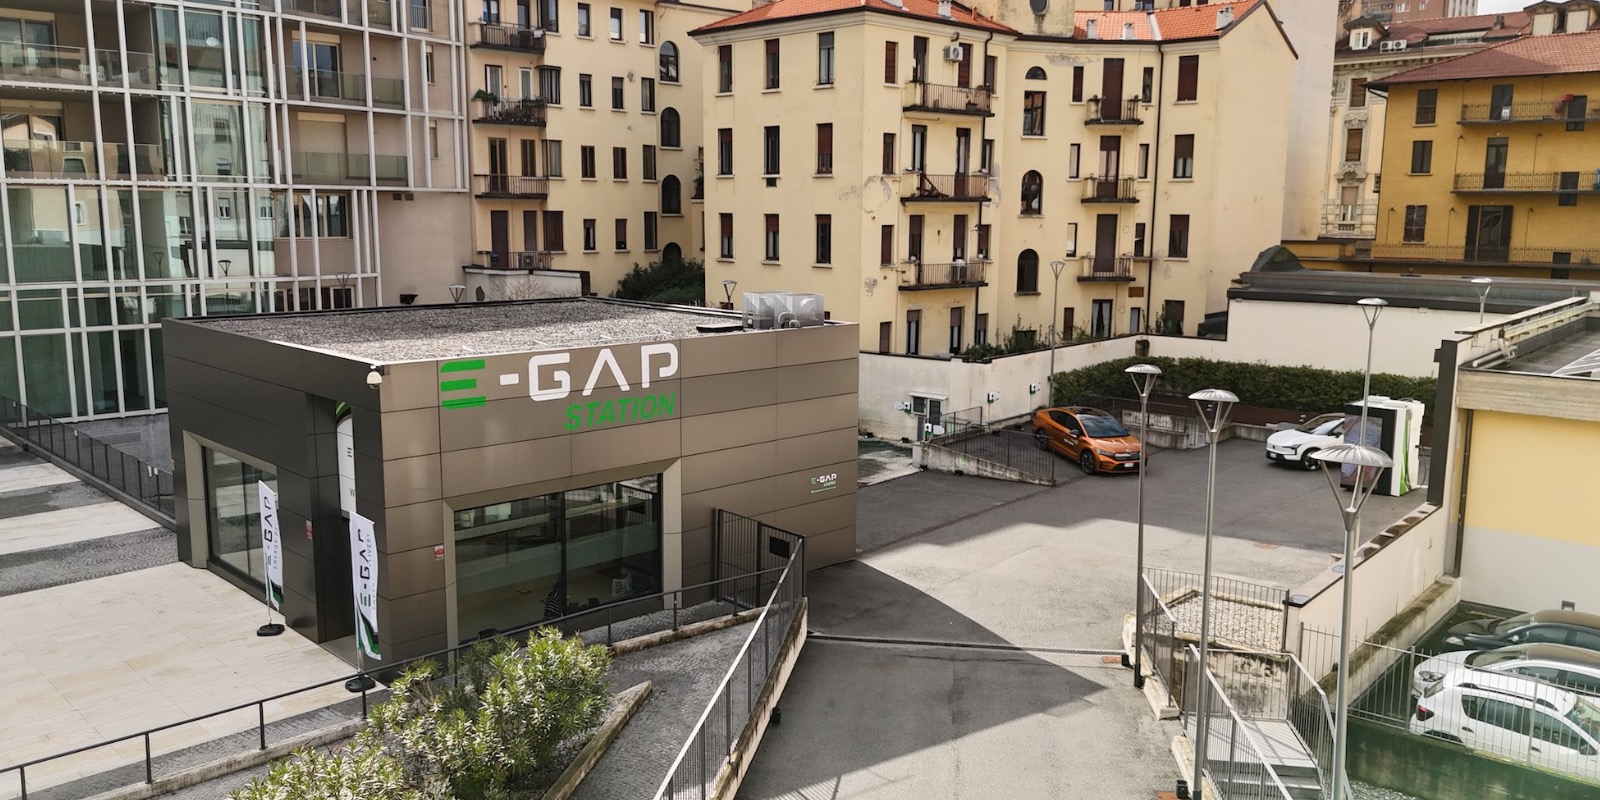 E-GAP STATION